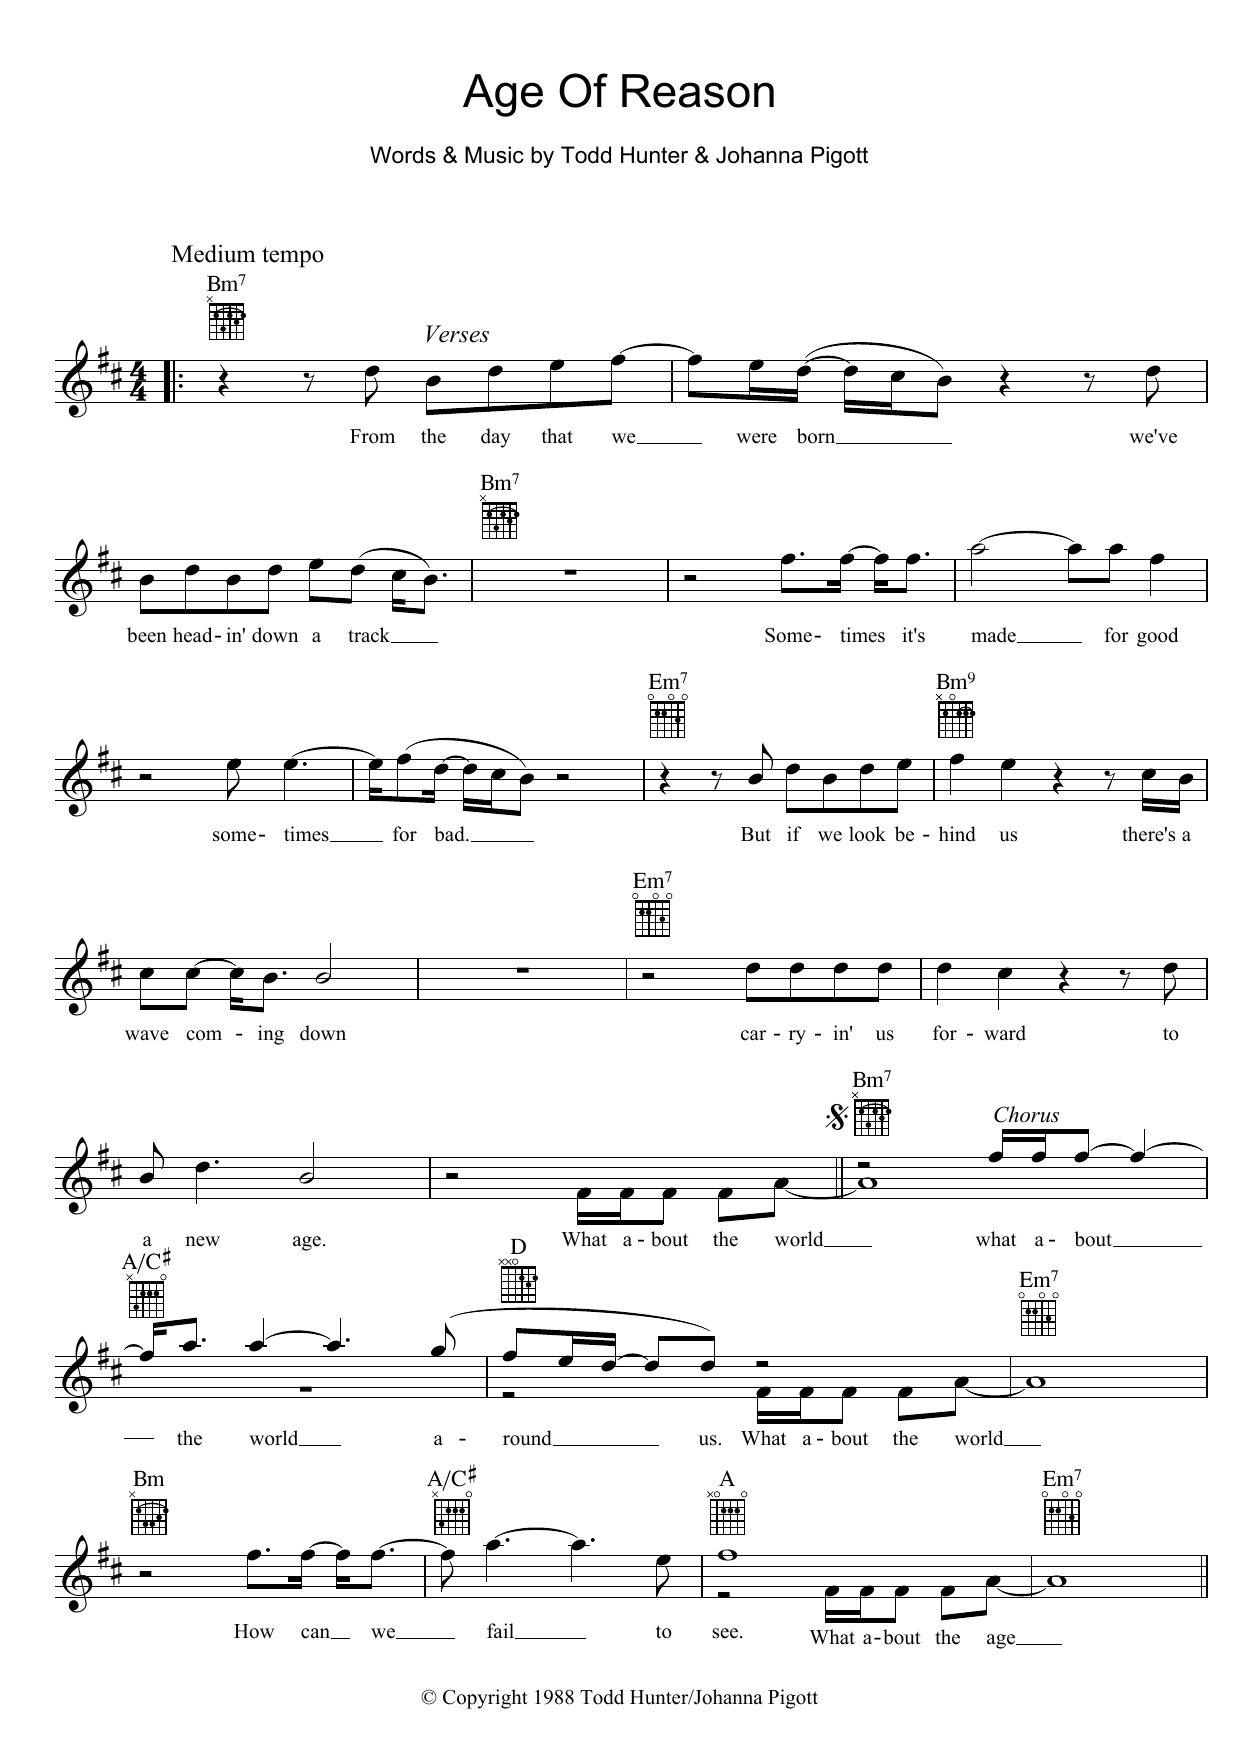 John Farnham Age Of Reason sheet music notes and chords arranged for Lead Sheet / Fake Book